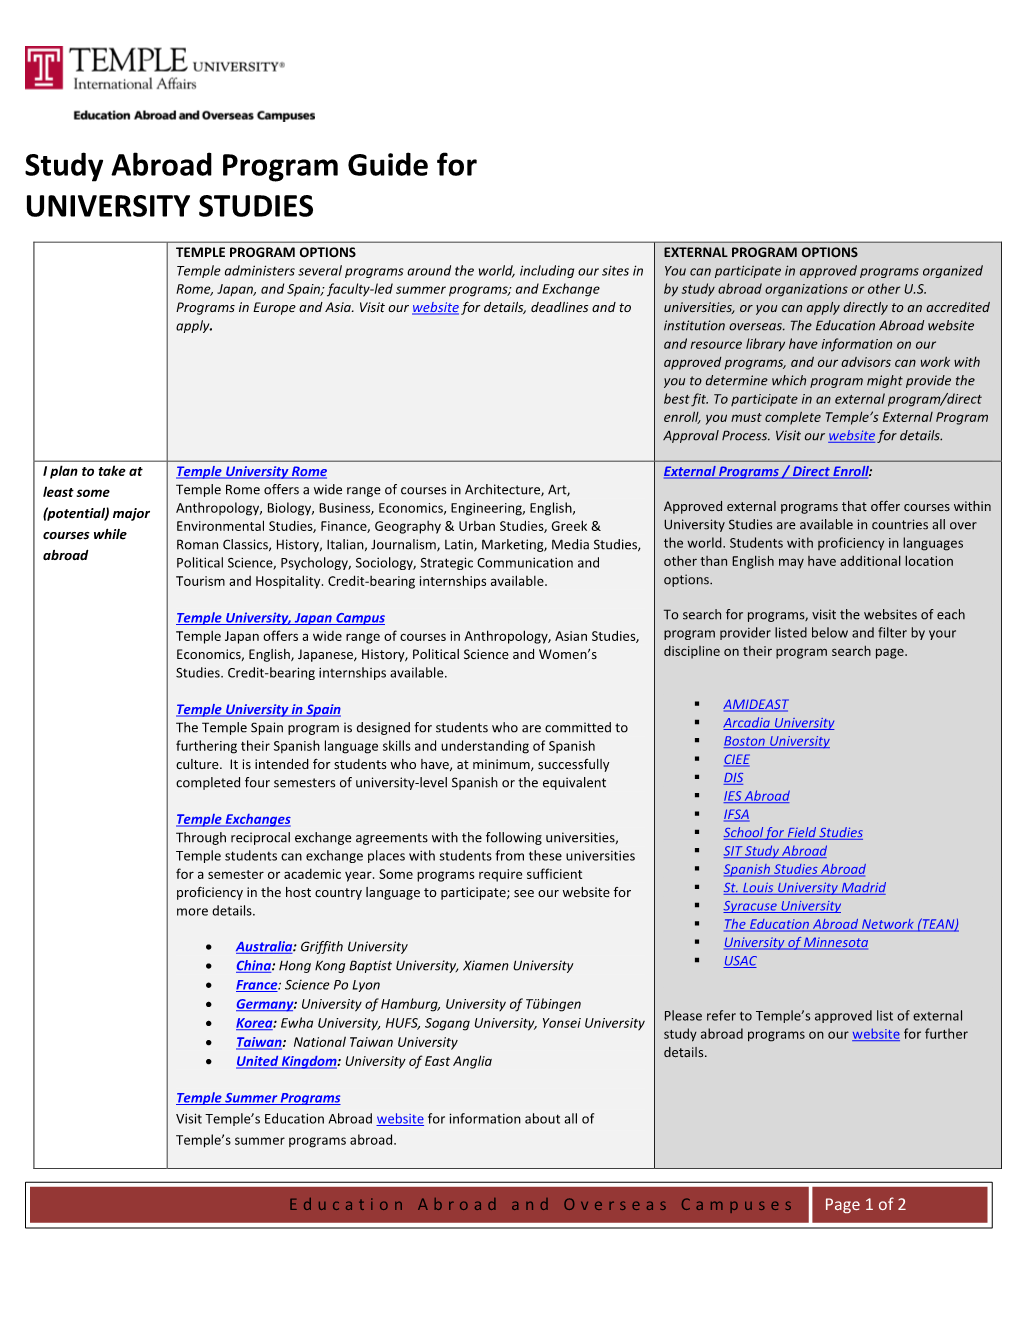 Study Abroad Program Guide for UNIVERSITY STUDIES